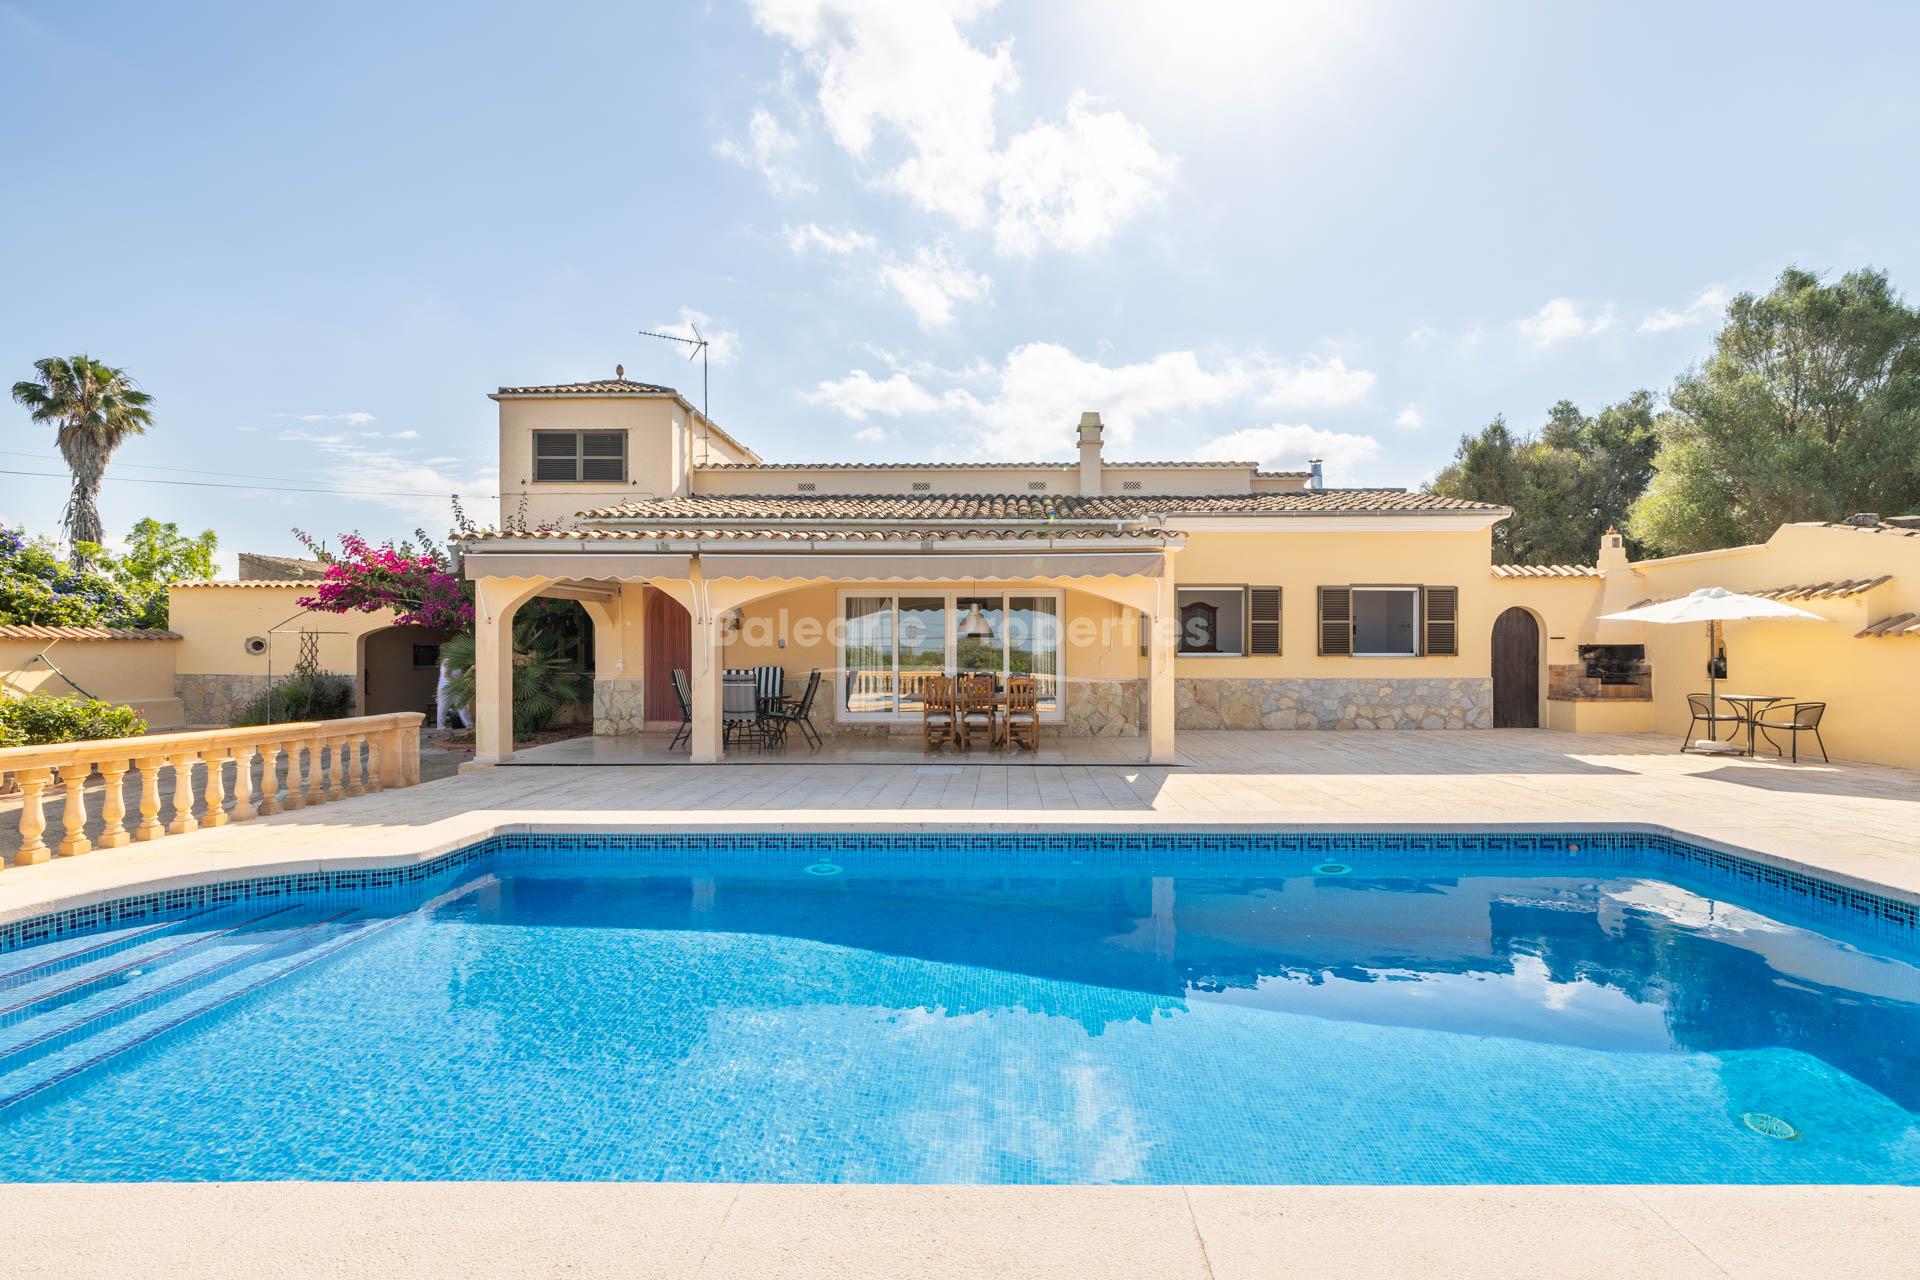 Delightful rural finca with pool for sale in Algaida, Mallorca